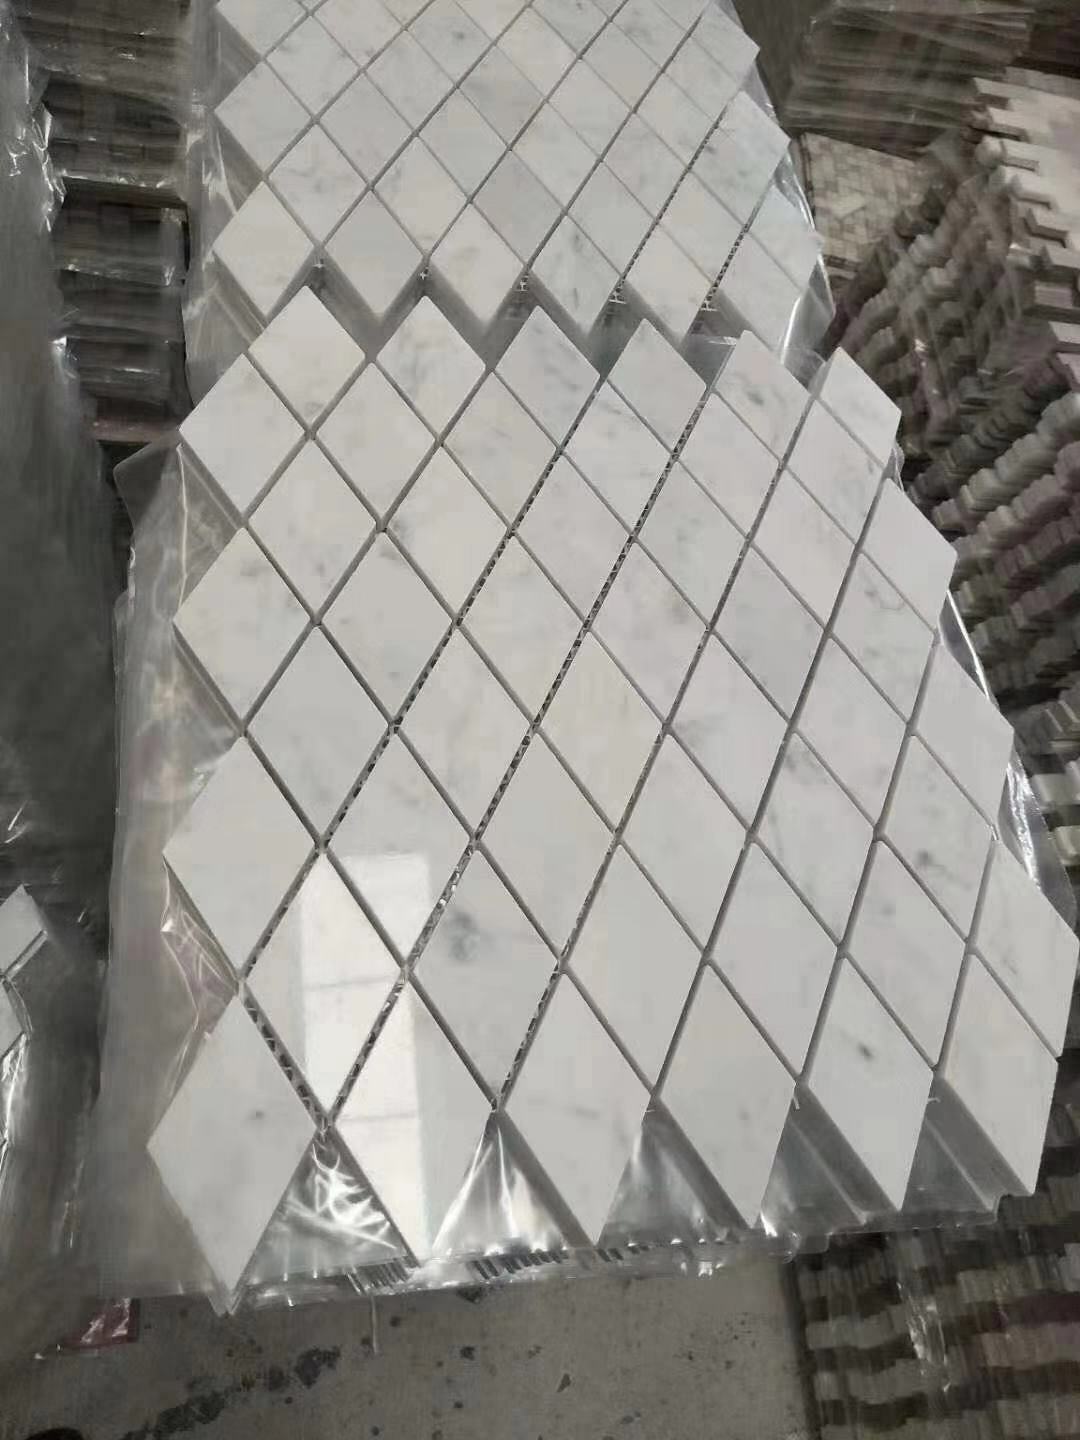 Carrara Marble Tile Mosaic Hexagon, Diamond, Penny Round